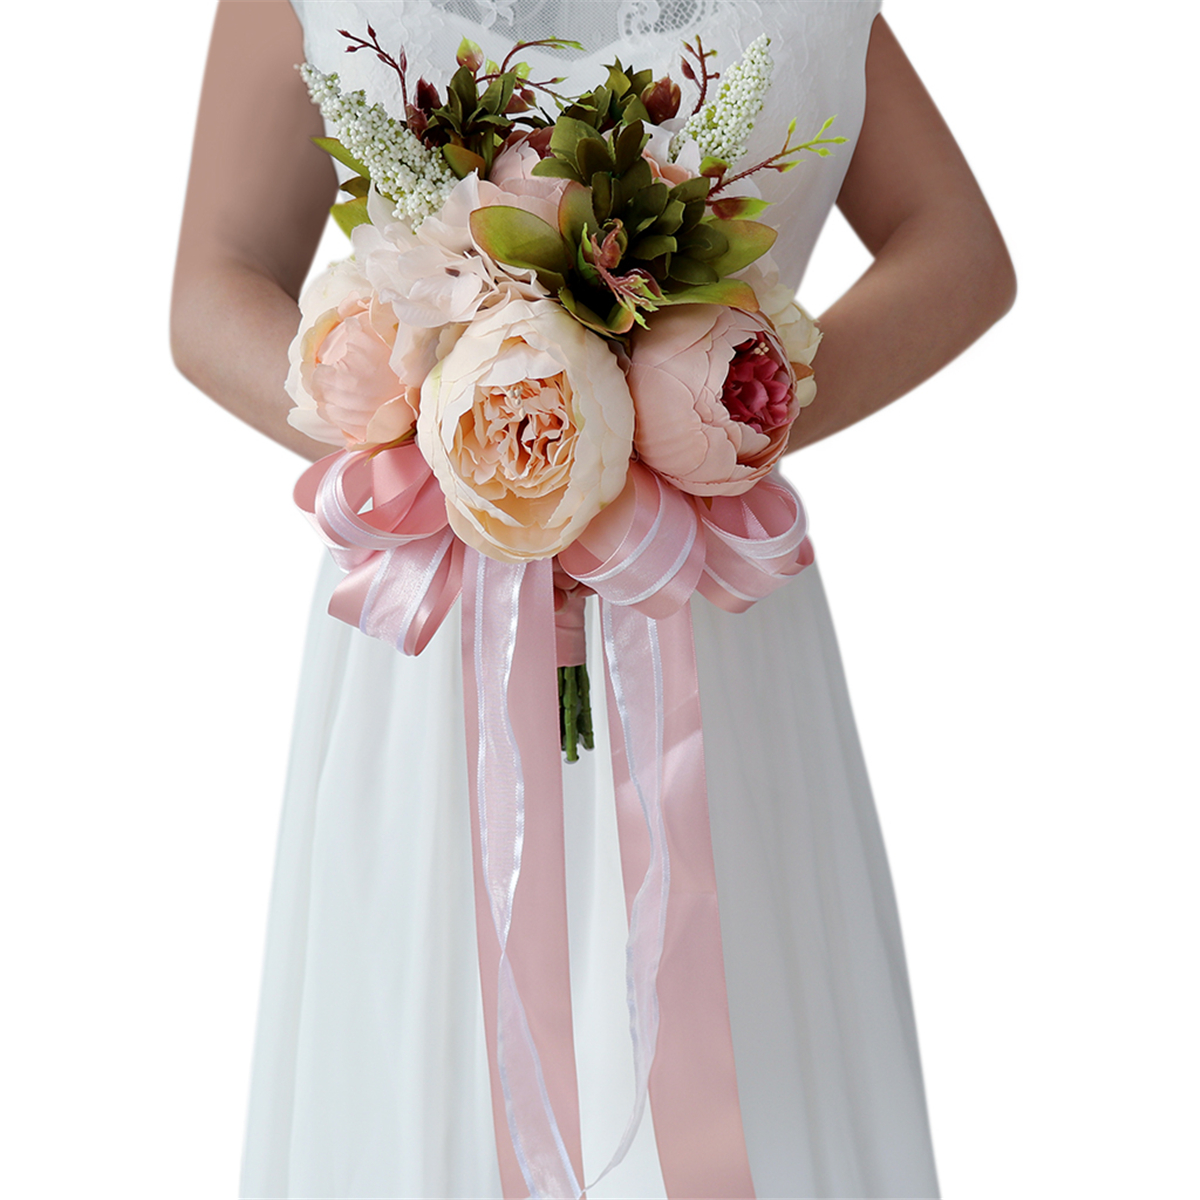 Wedding-Bridal-Bouquets-Handmade-Artificial-Flowers-Decorations-Bride-Accessories-1643090-3